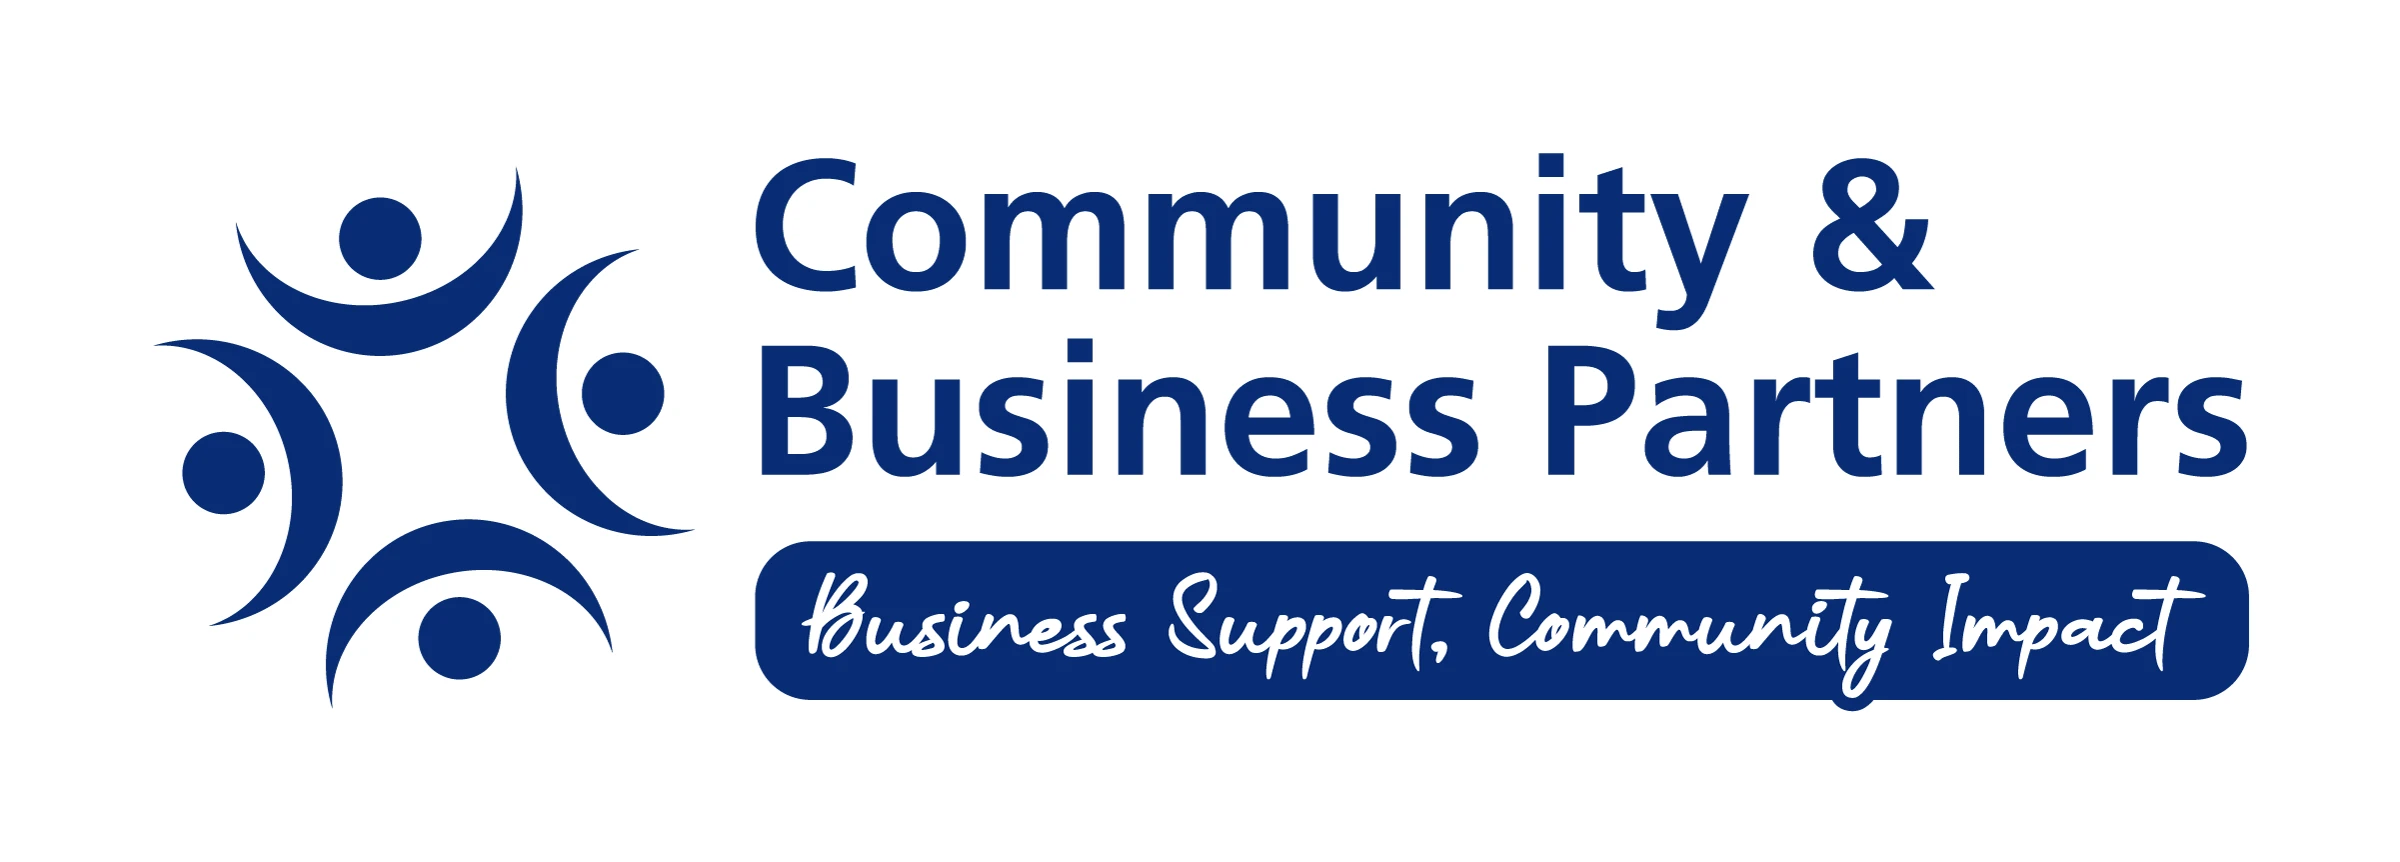 Community & Business Partners CIC Logo